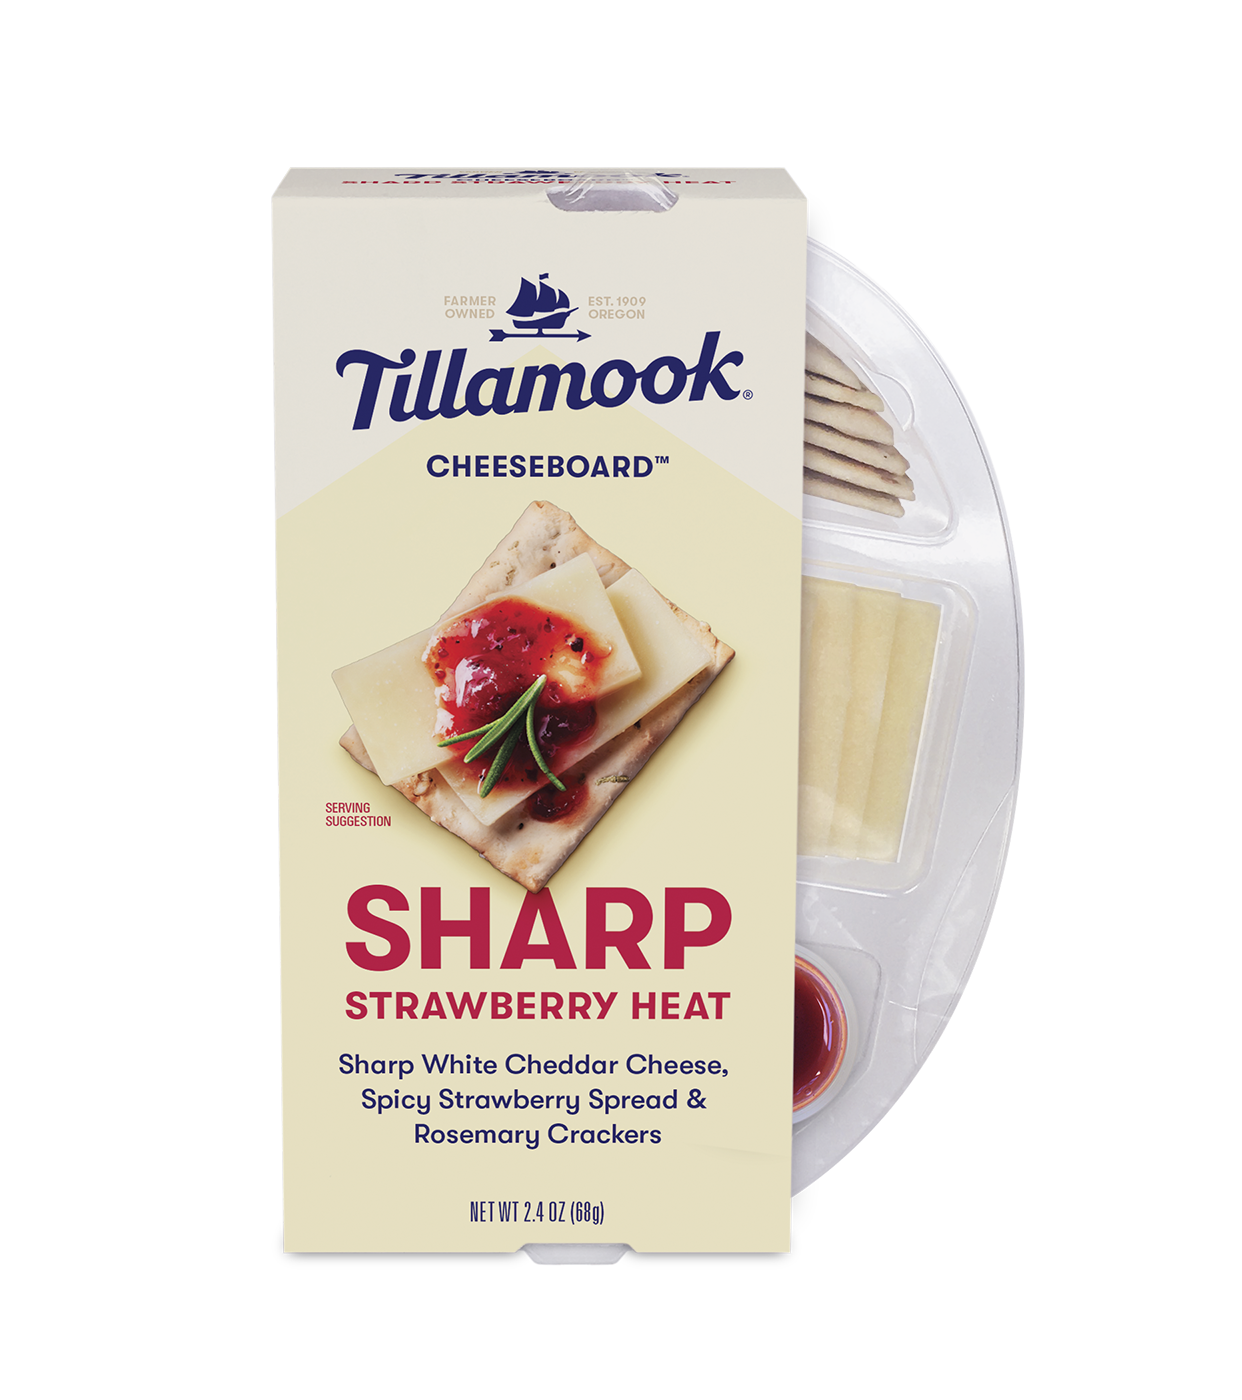 TIL_2019_Cheeseboards_SharpStrawberryHeat_SO.png